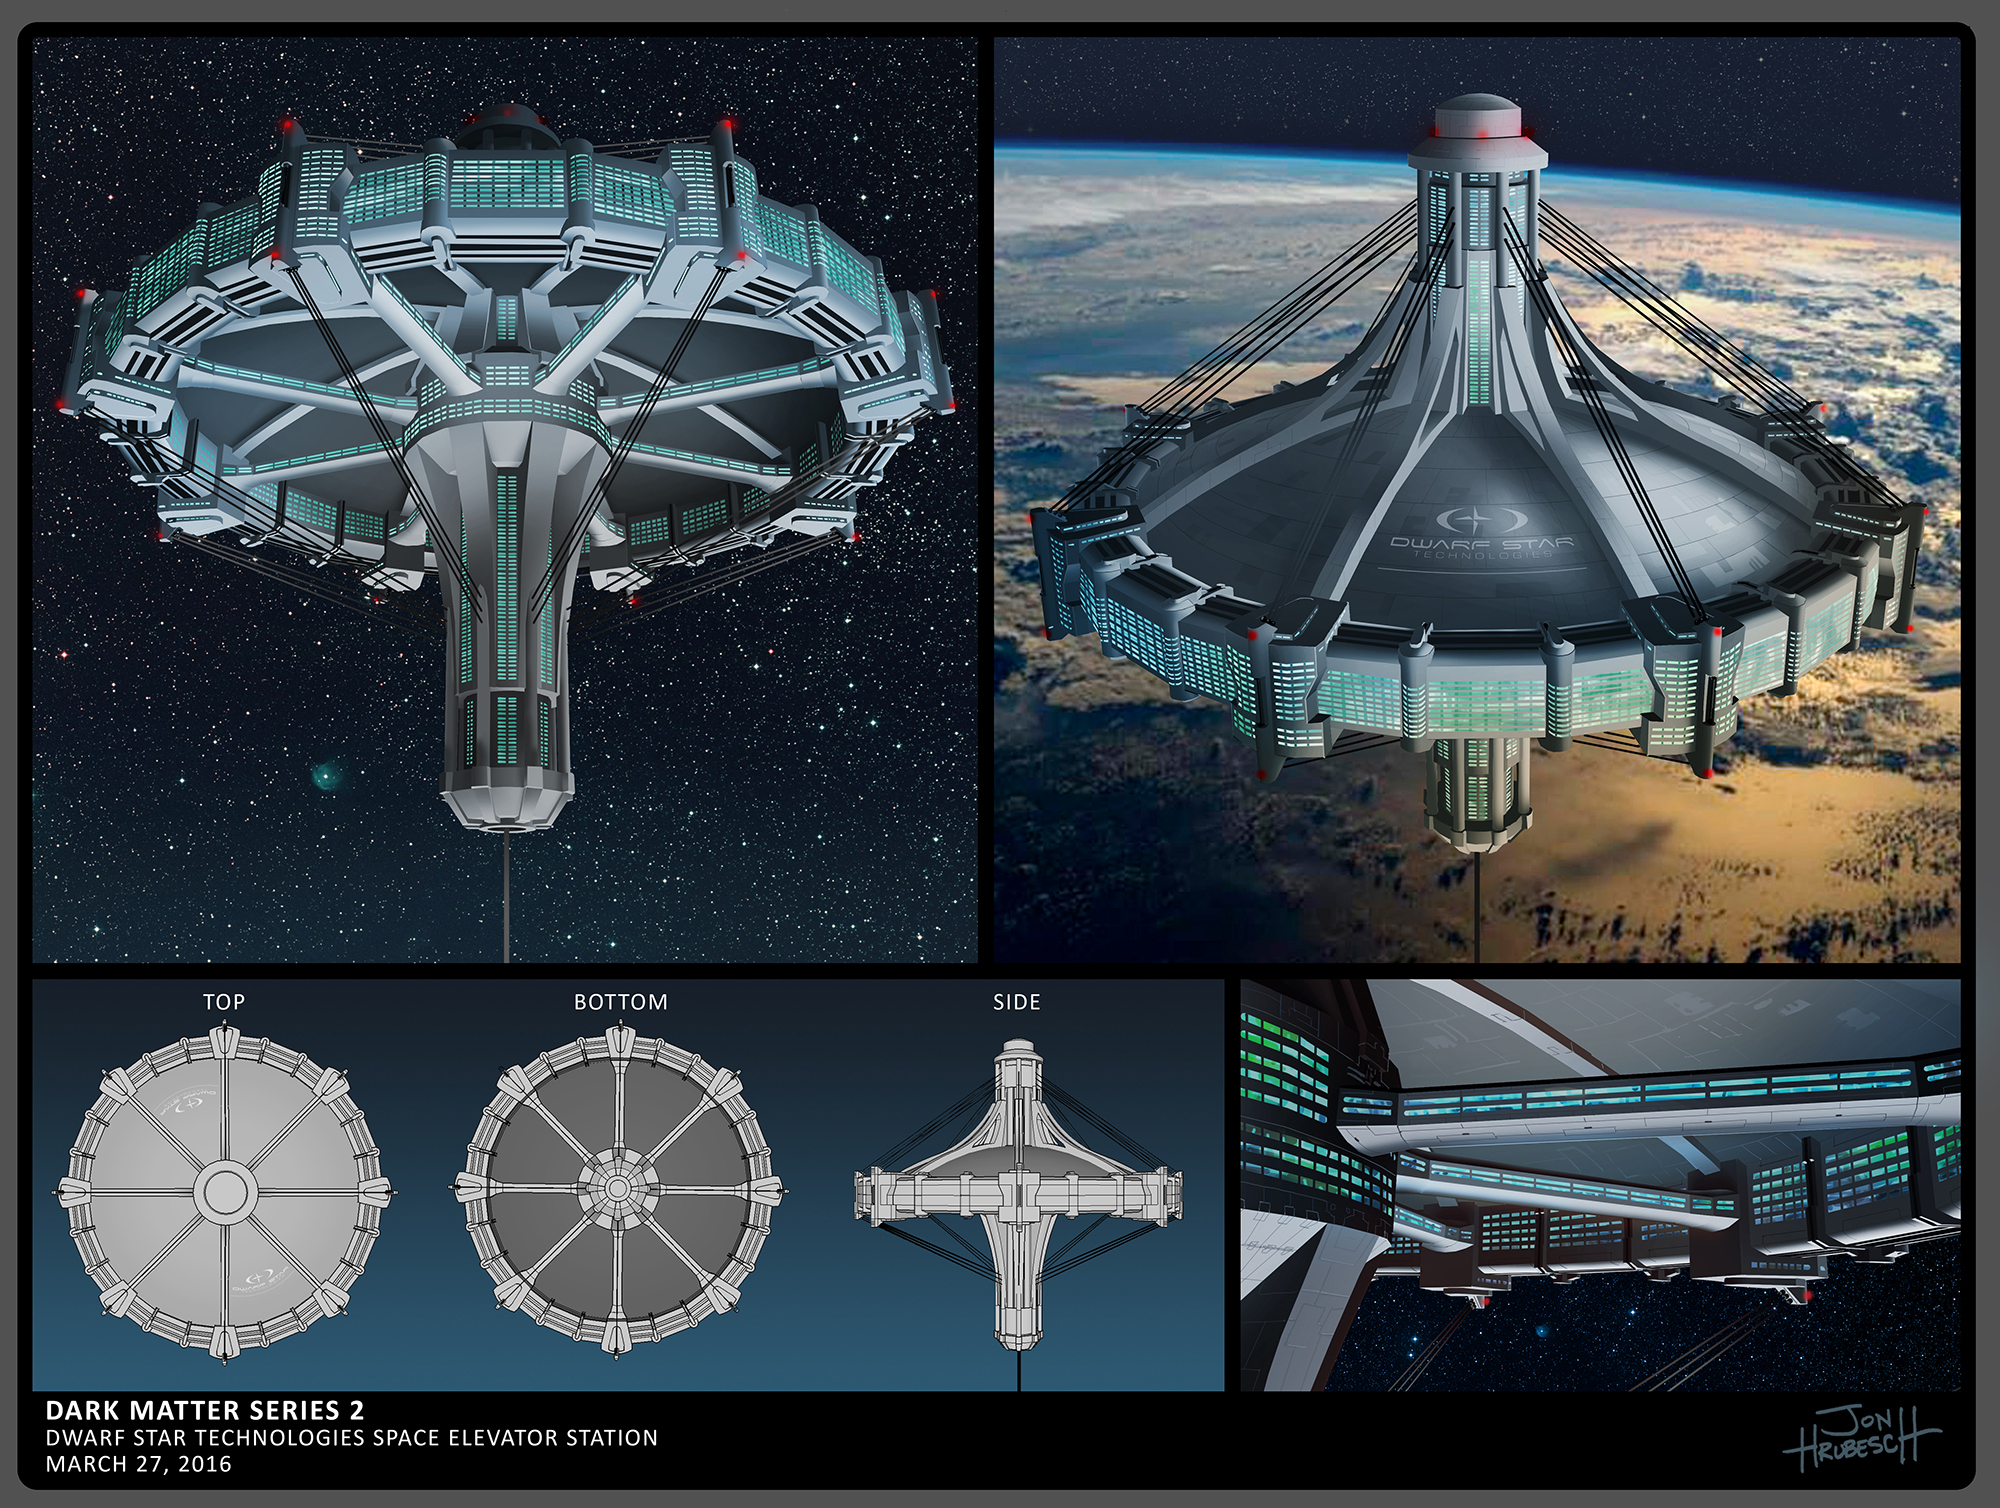 Dwarf Star Technologies Space Elevator Station Final Concept